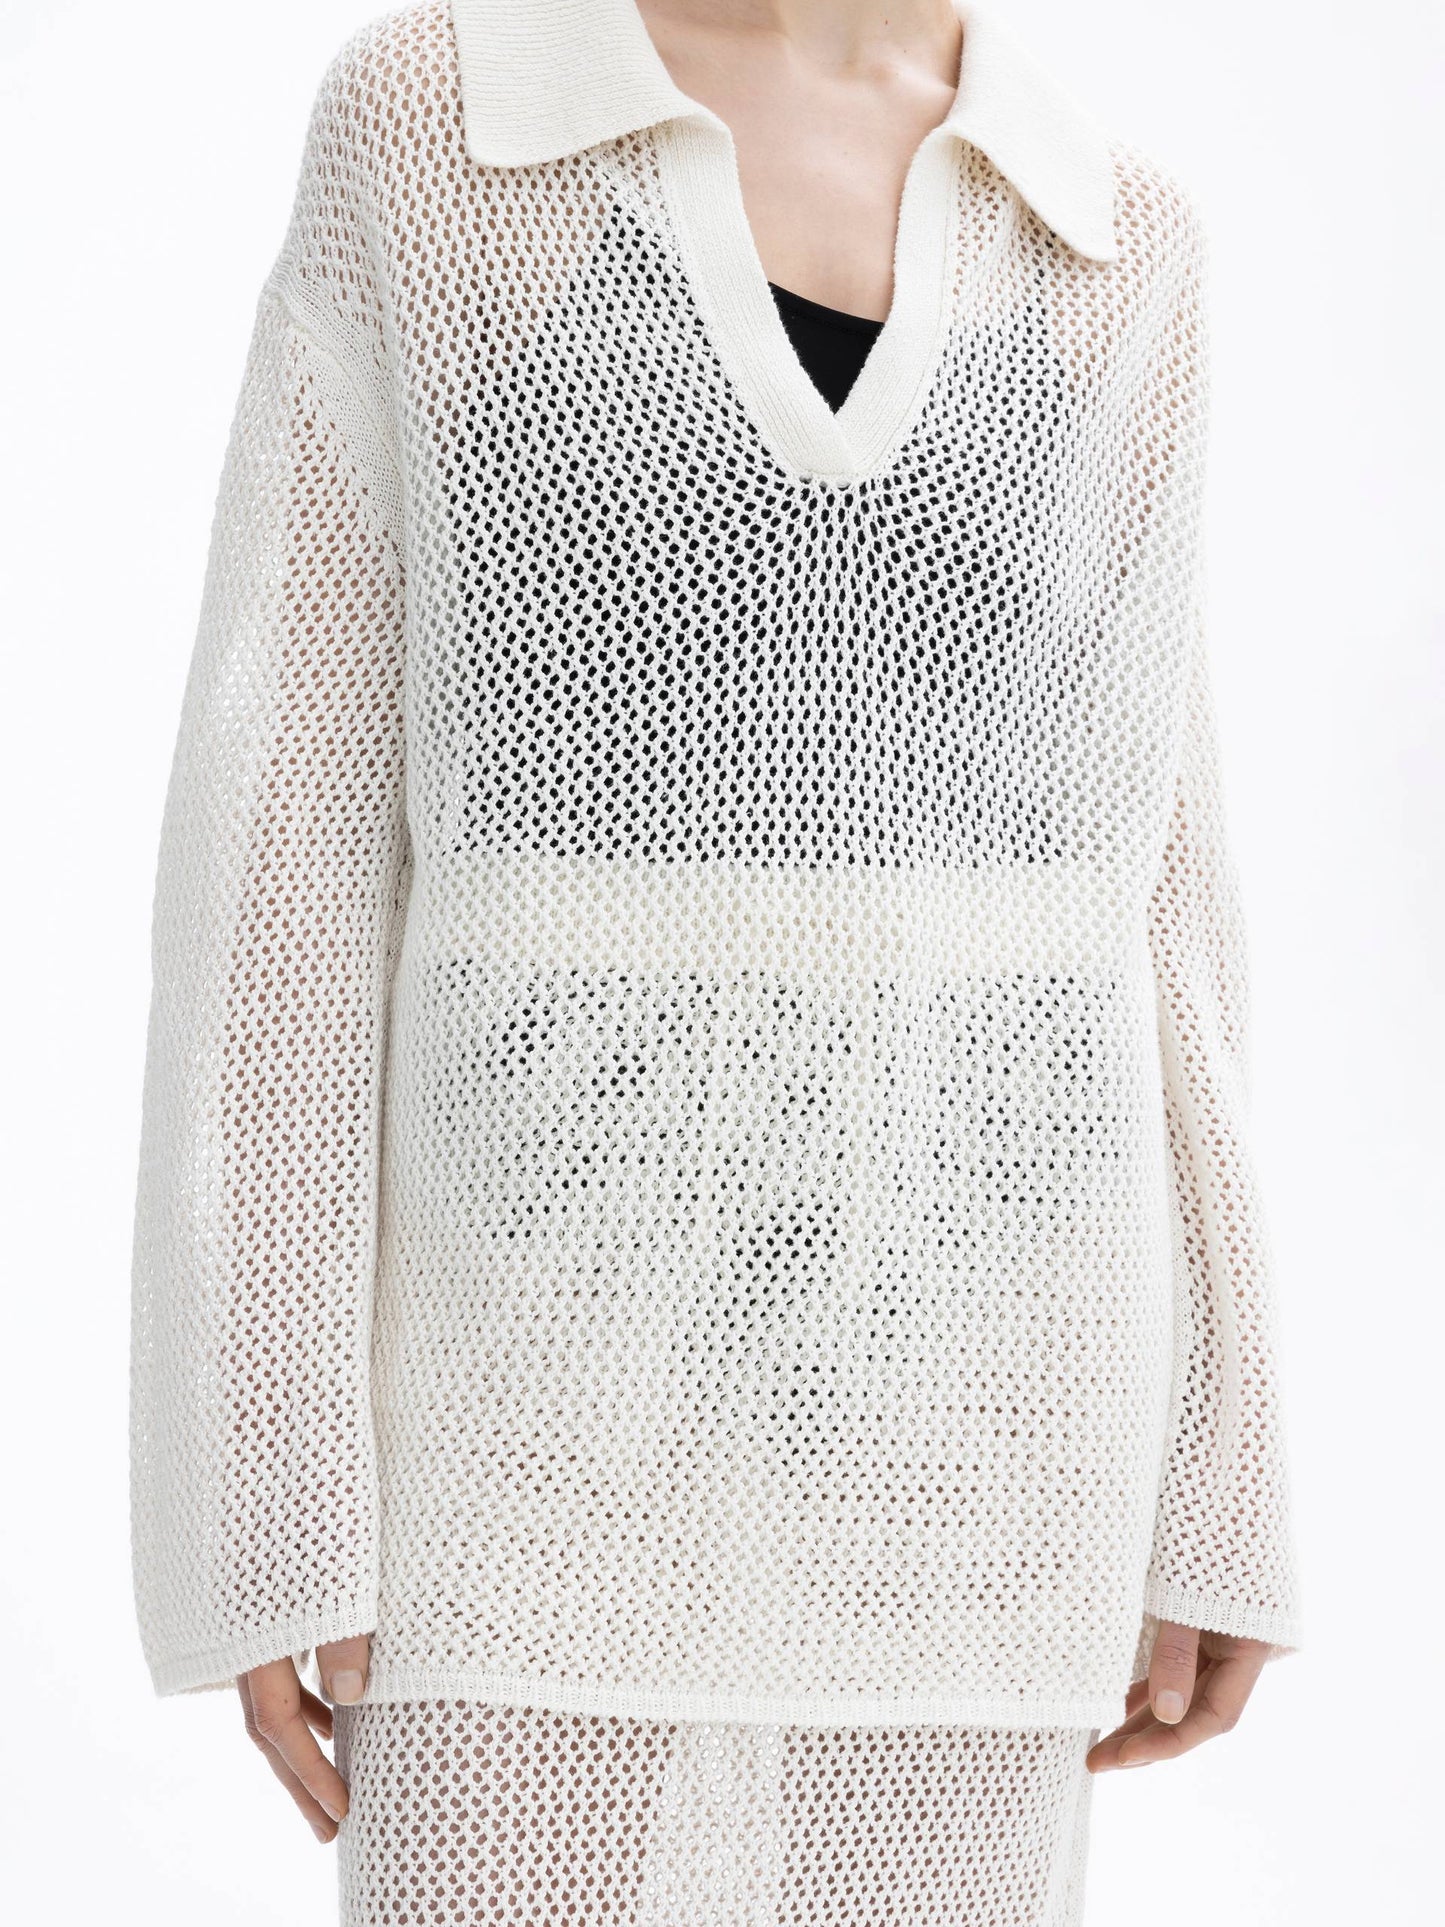 Crochet Knit, Off White, Pullover